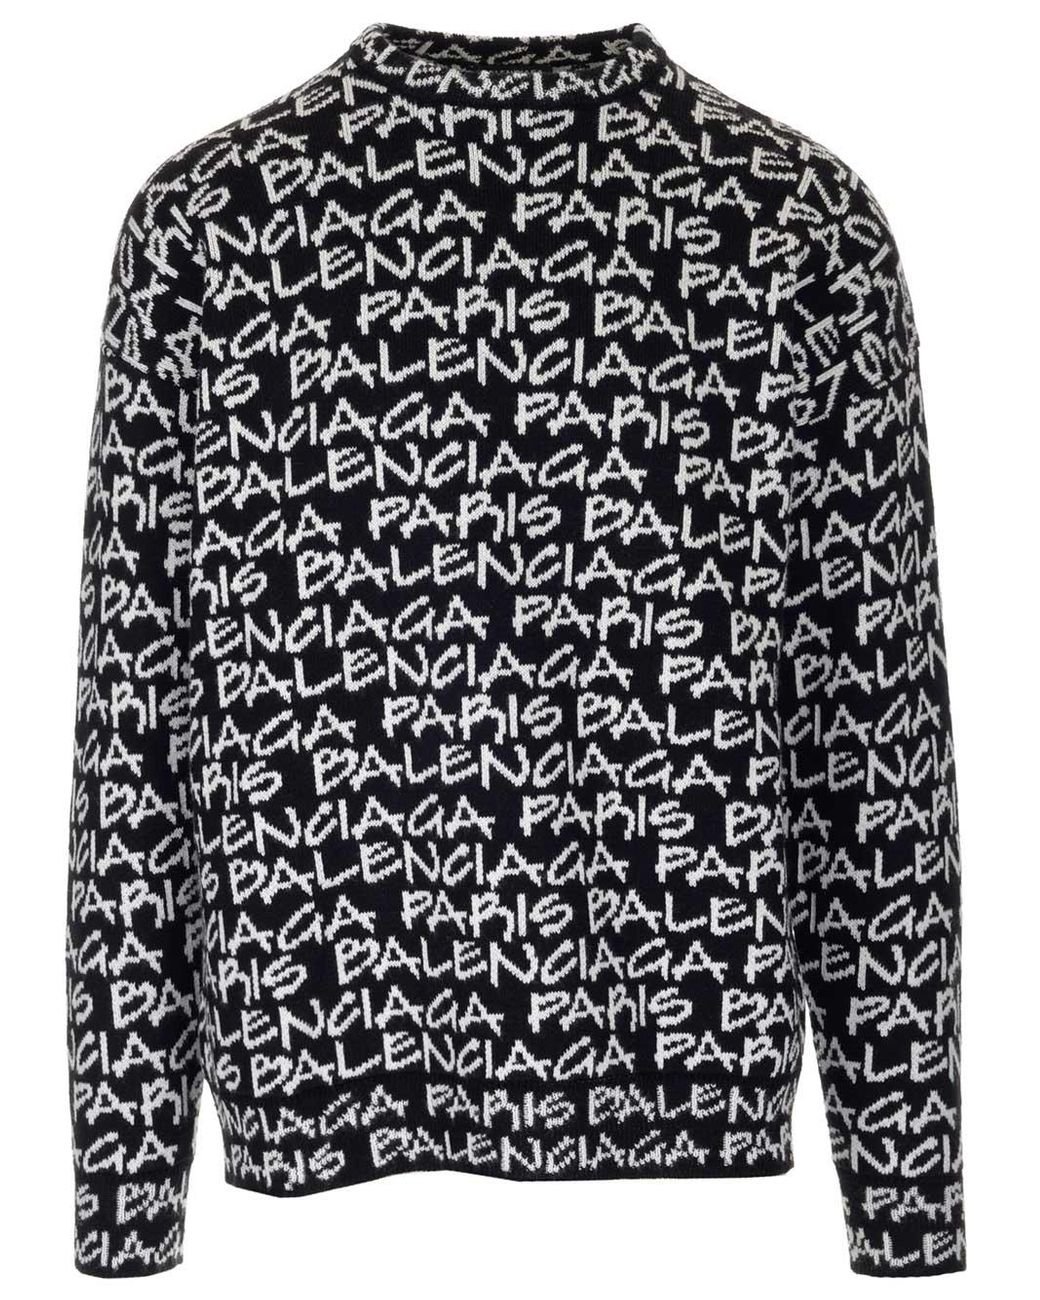 Balenciaga Cotton All Over Logo Crewneck Sweater in Black for Men - Lyst